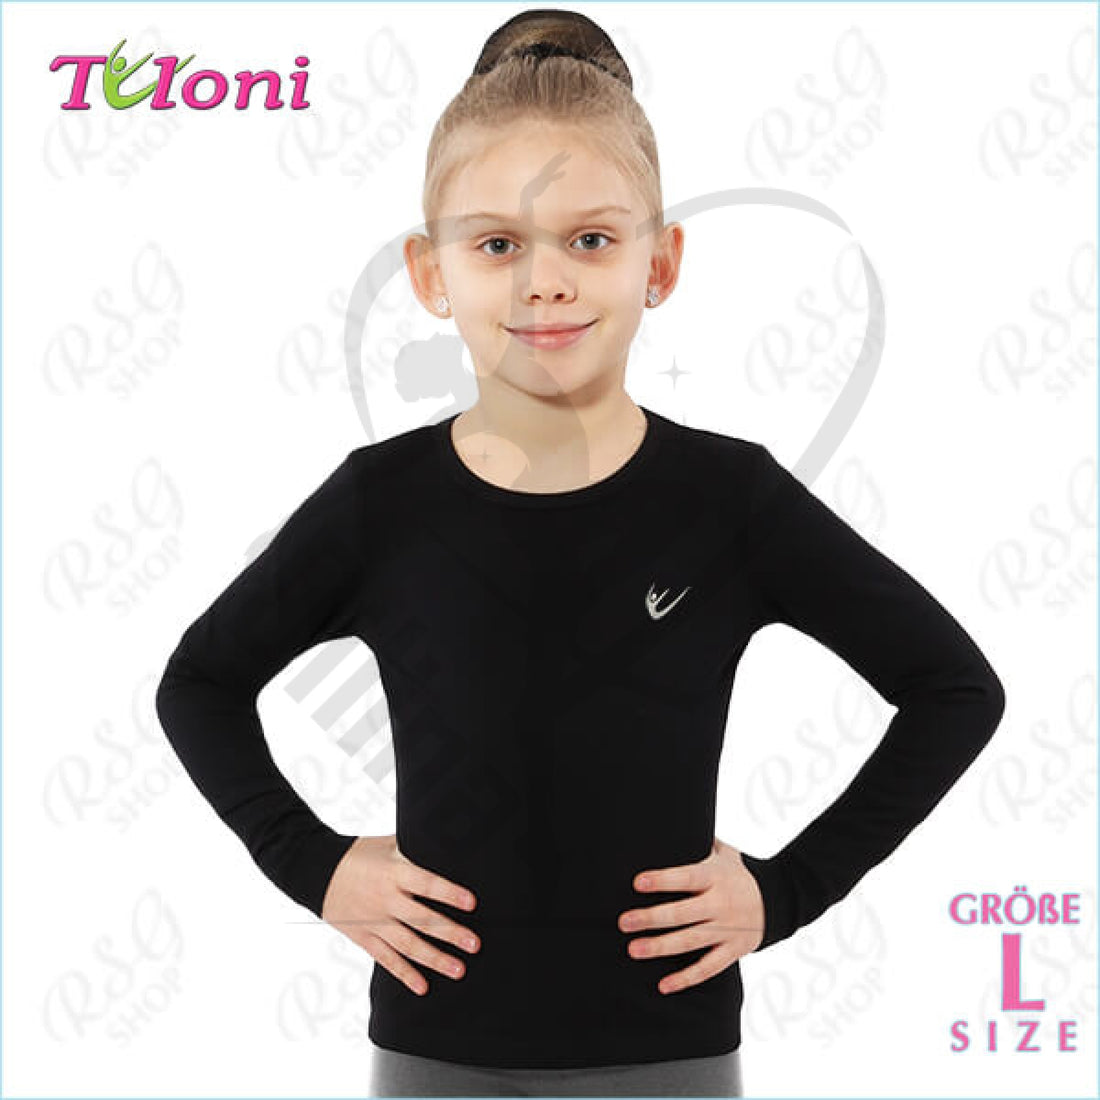 Tuloni Long Sleeve Top L (158-164) T Shirts & Tops